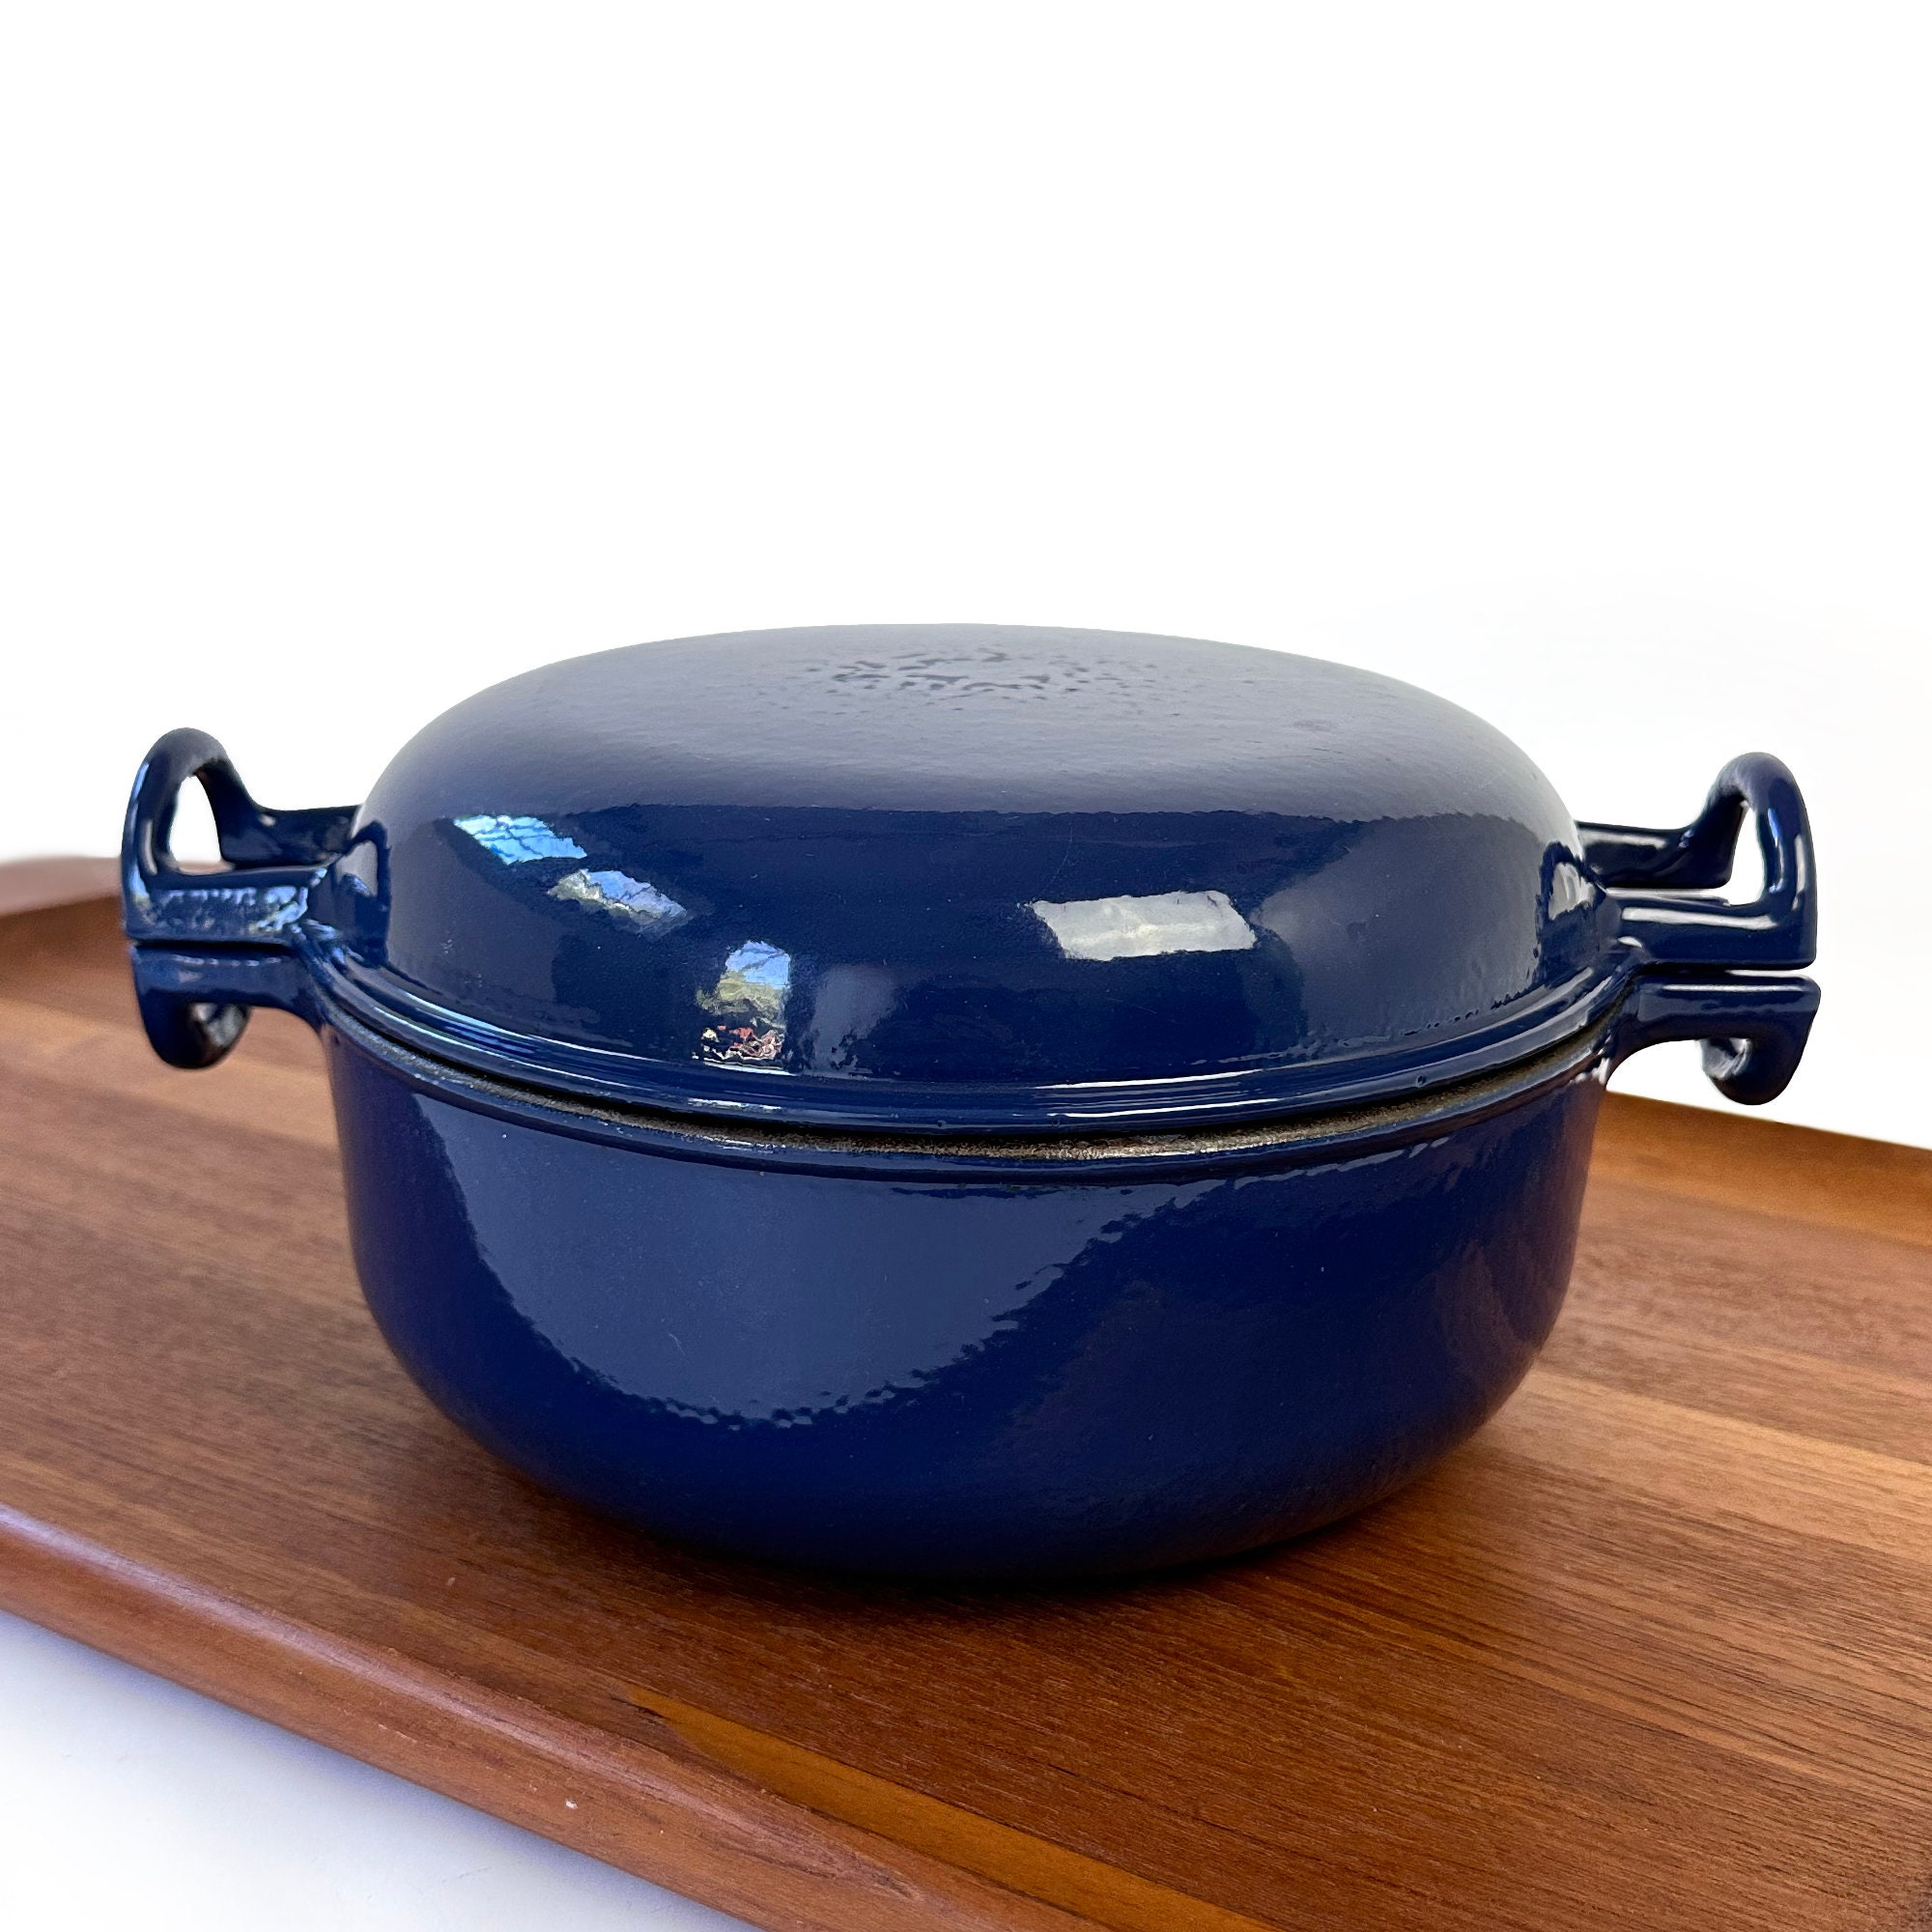 DANSK 833297 Koben Style Double Handed Pot, 7.1 inches (18 cm), 2.2 L.,  Induction Compatible, Turquoise/Teal, Oven Safe, Enameled